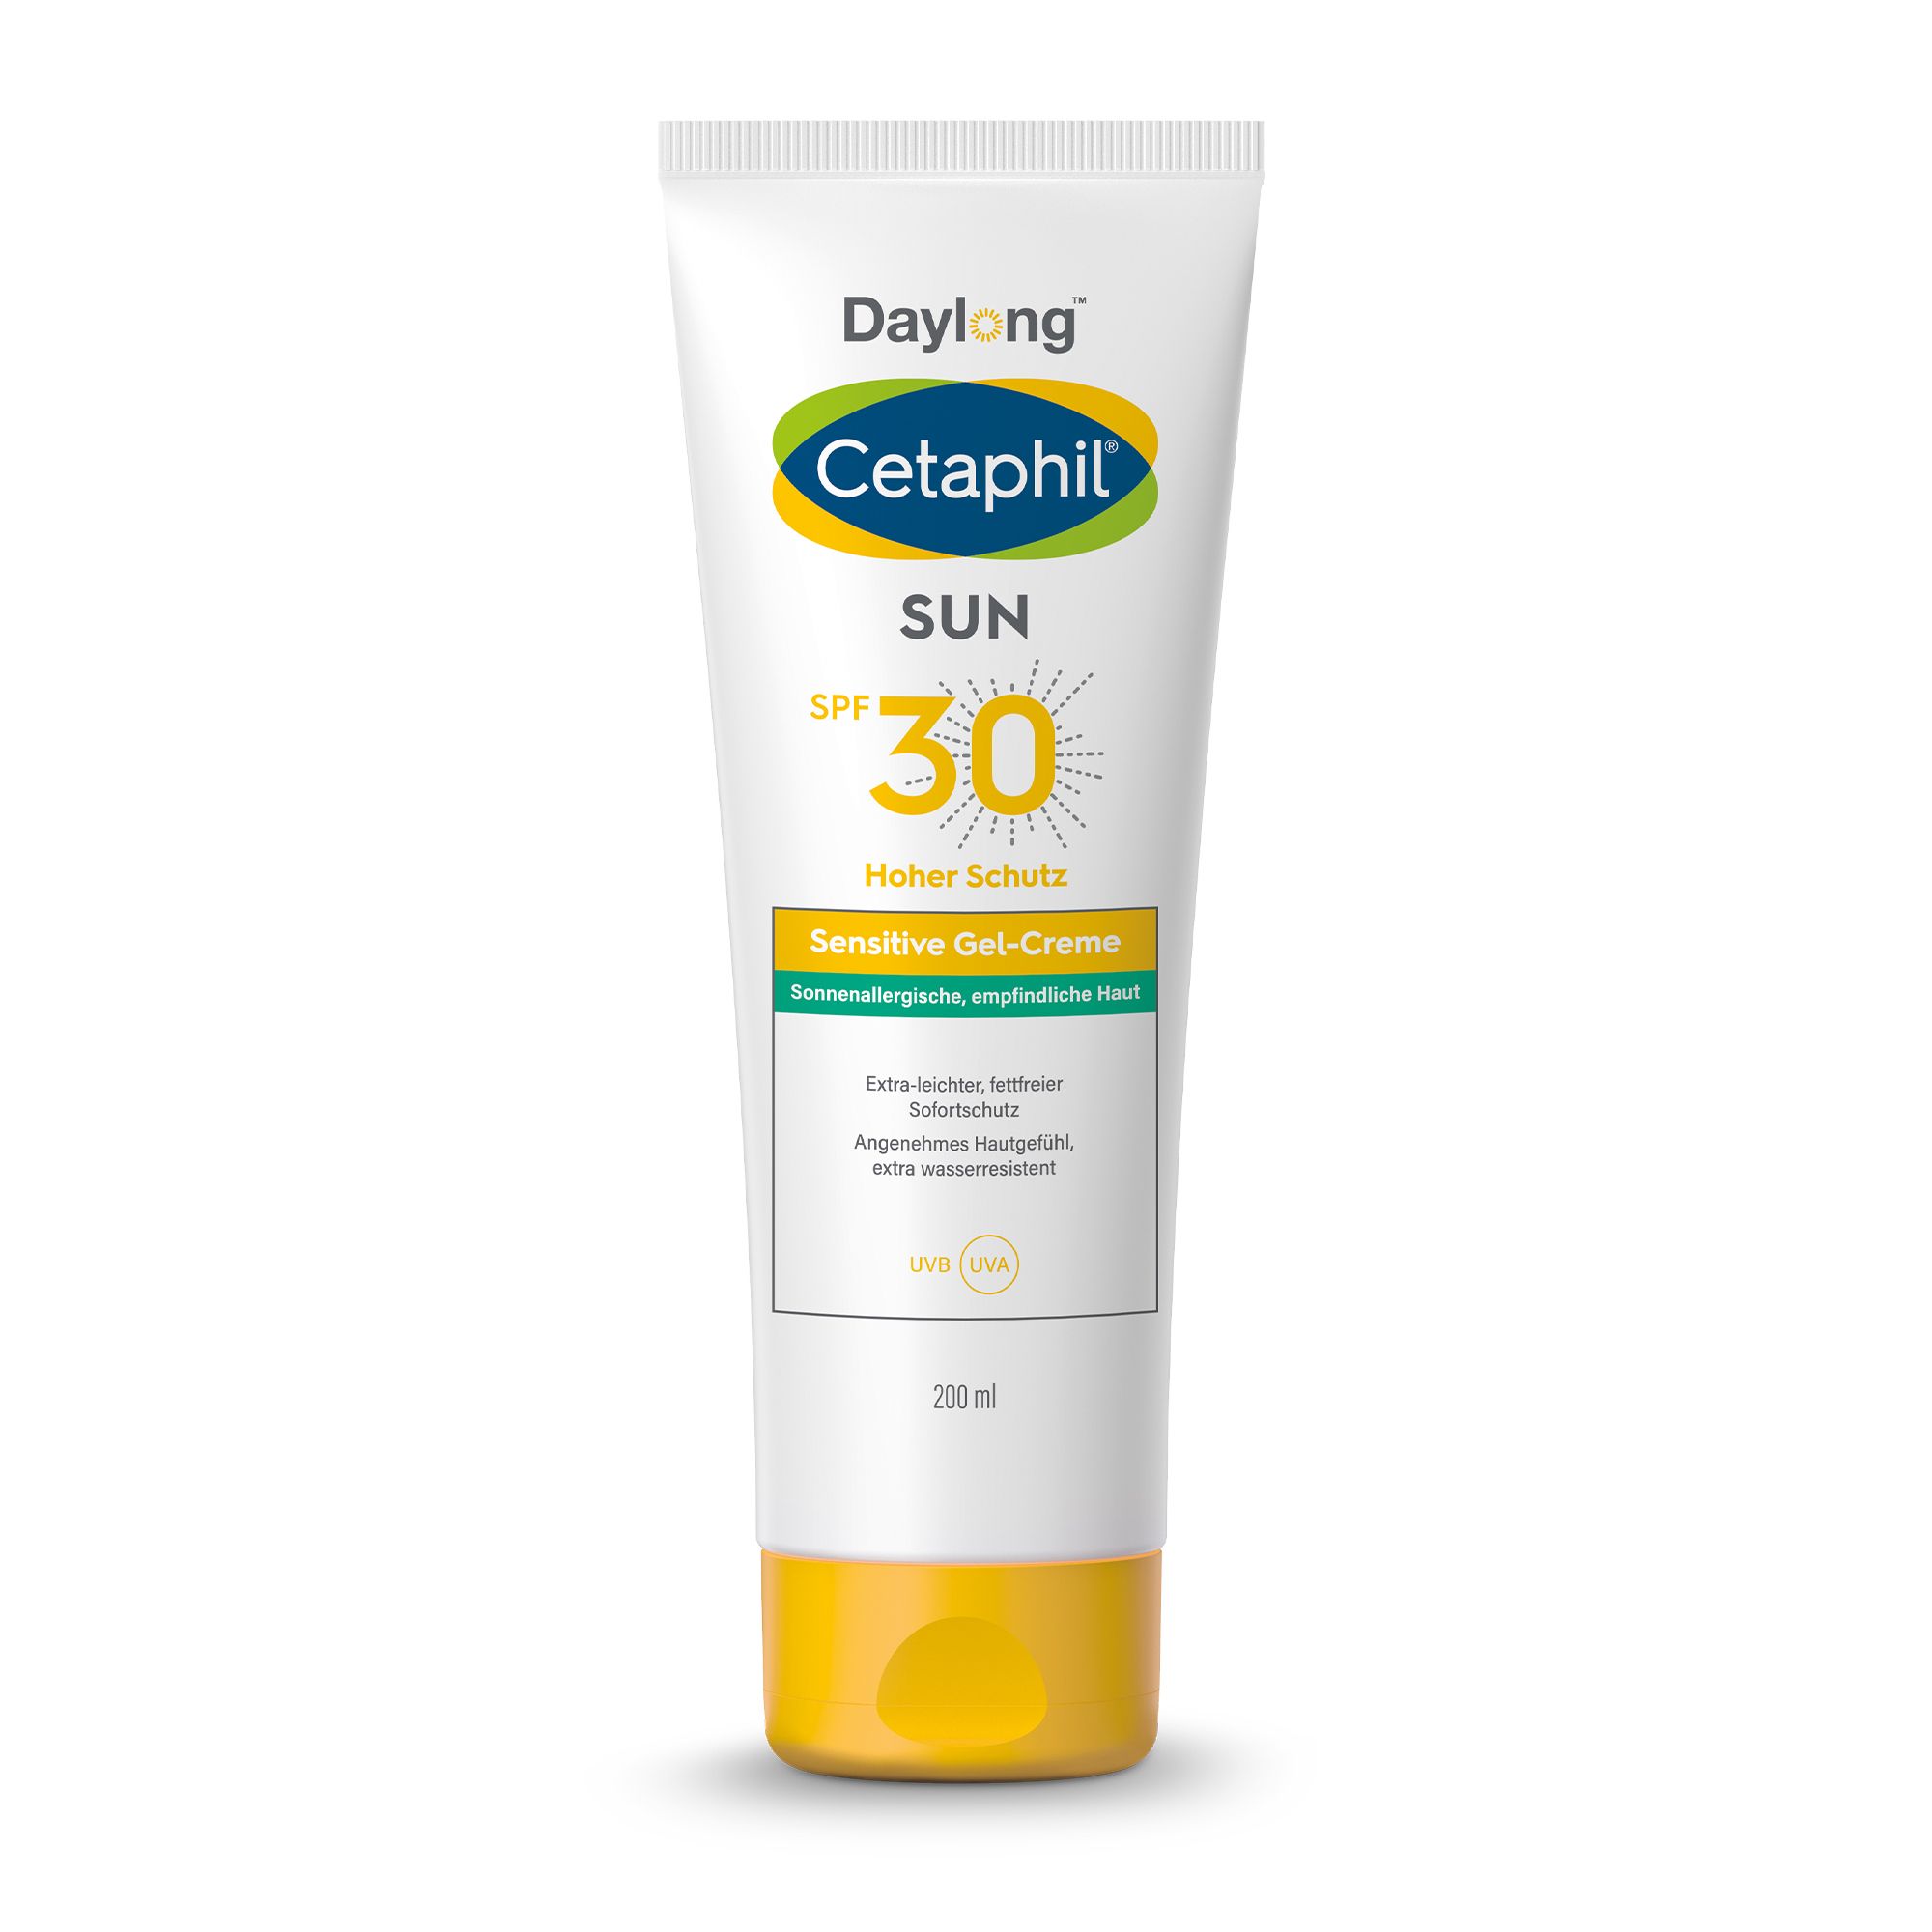 Cetaphil® Sun Daylong™ SPF 30 Sensitive Gel-Creme